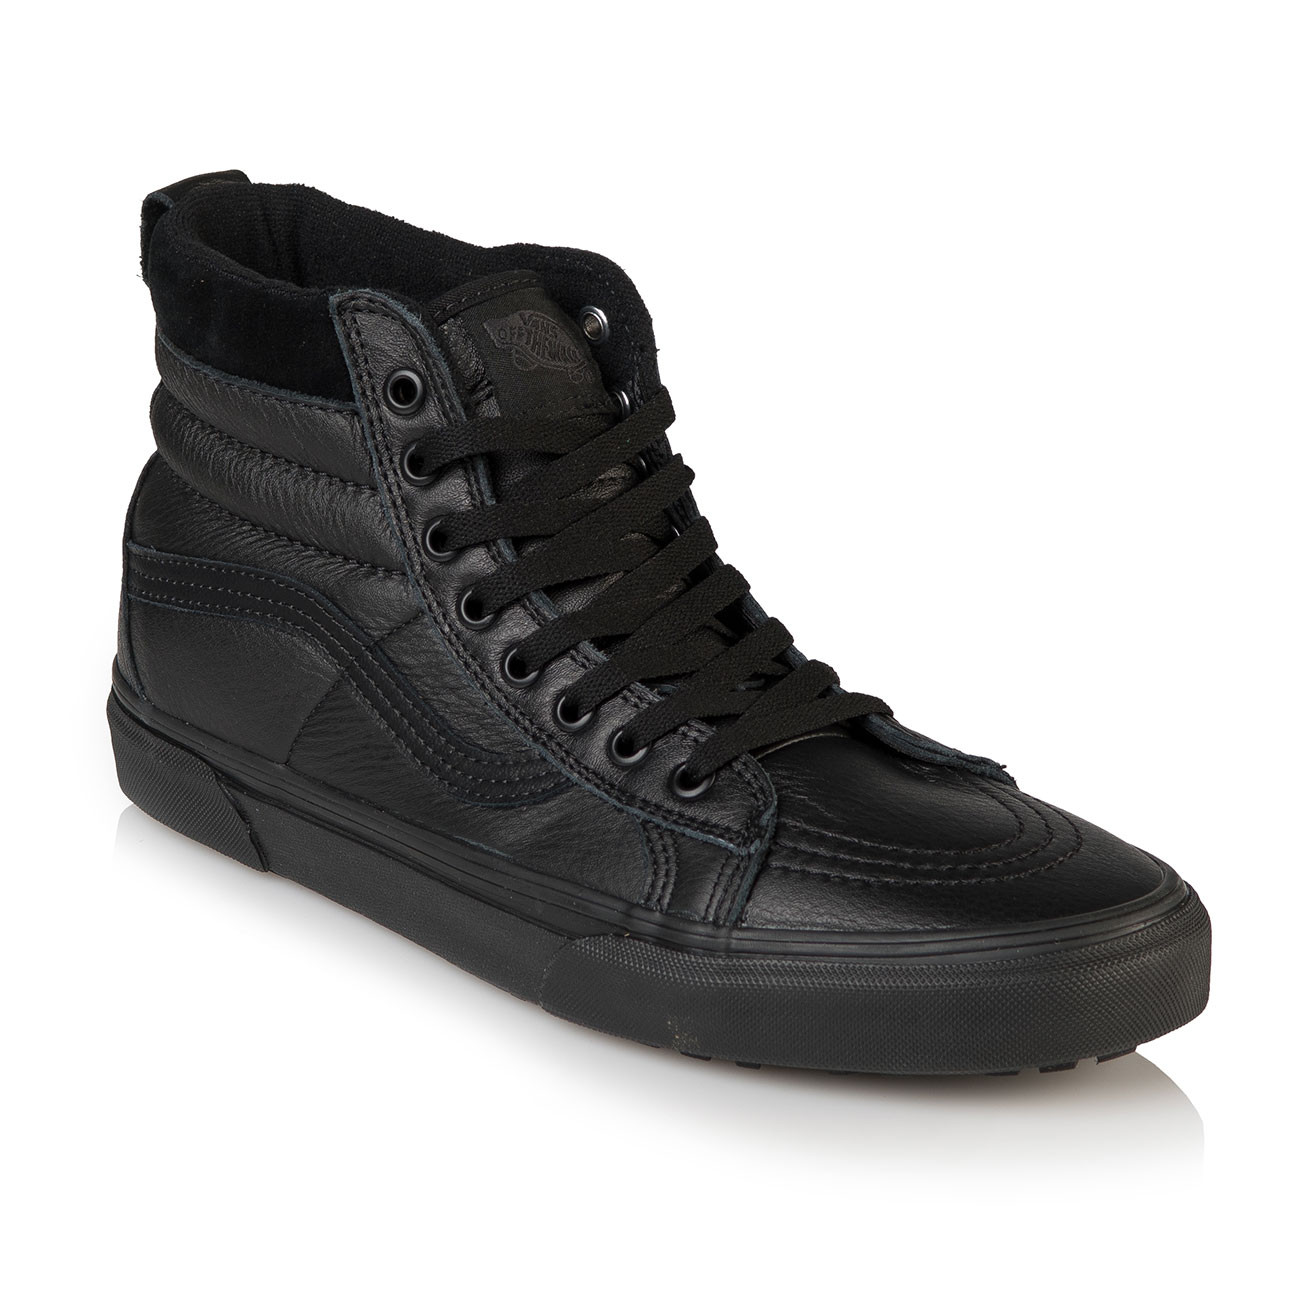 Winter shoes Vans Sk8-Hi MTE leather 